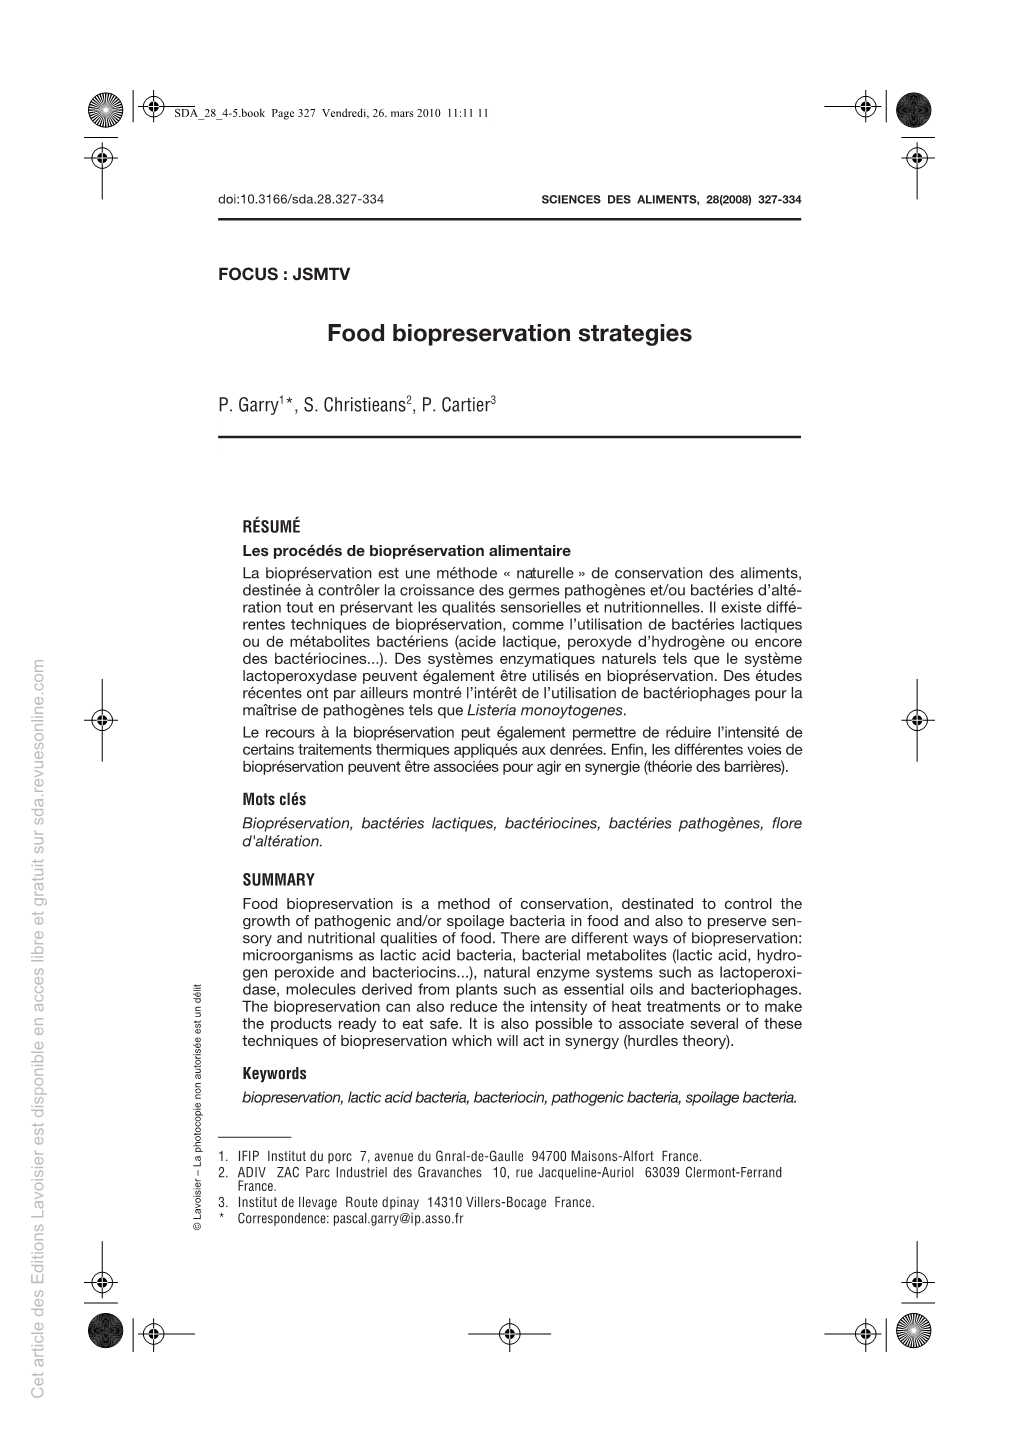 Food Biopreservation Strategies